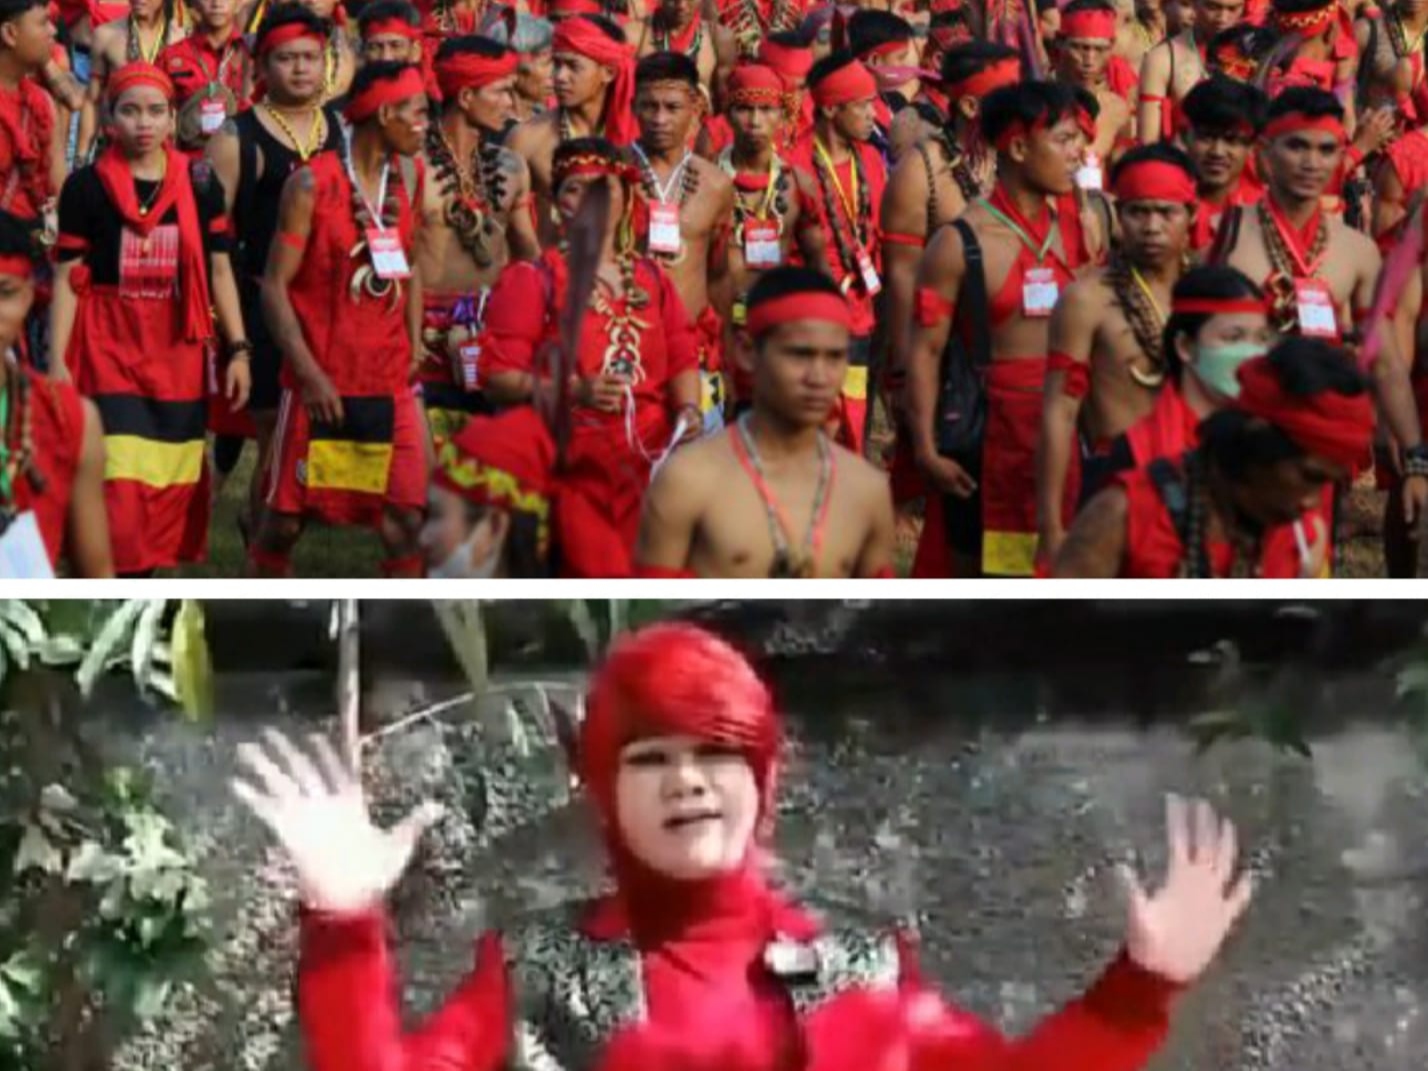 Geger! Pasukan Panglima Merah Dayak Kalimantan Timur Tiba di Jakarta, Siap Tarung Ilmu dengan Pesulap Merah